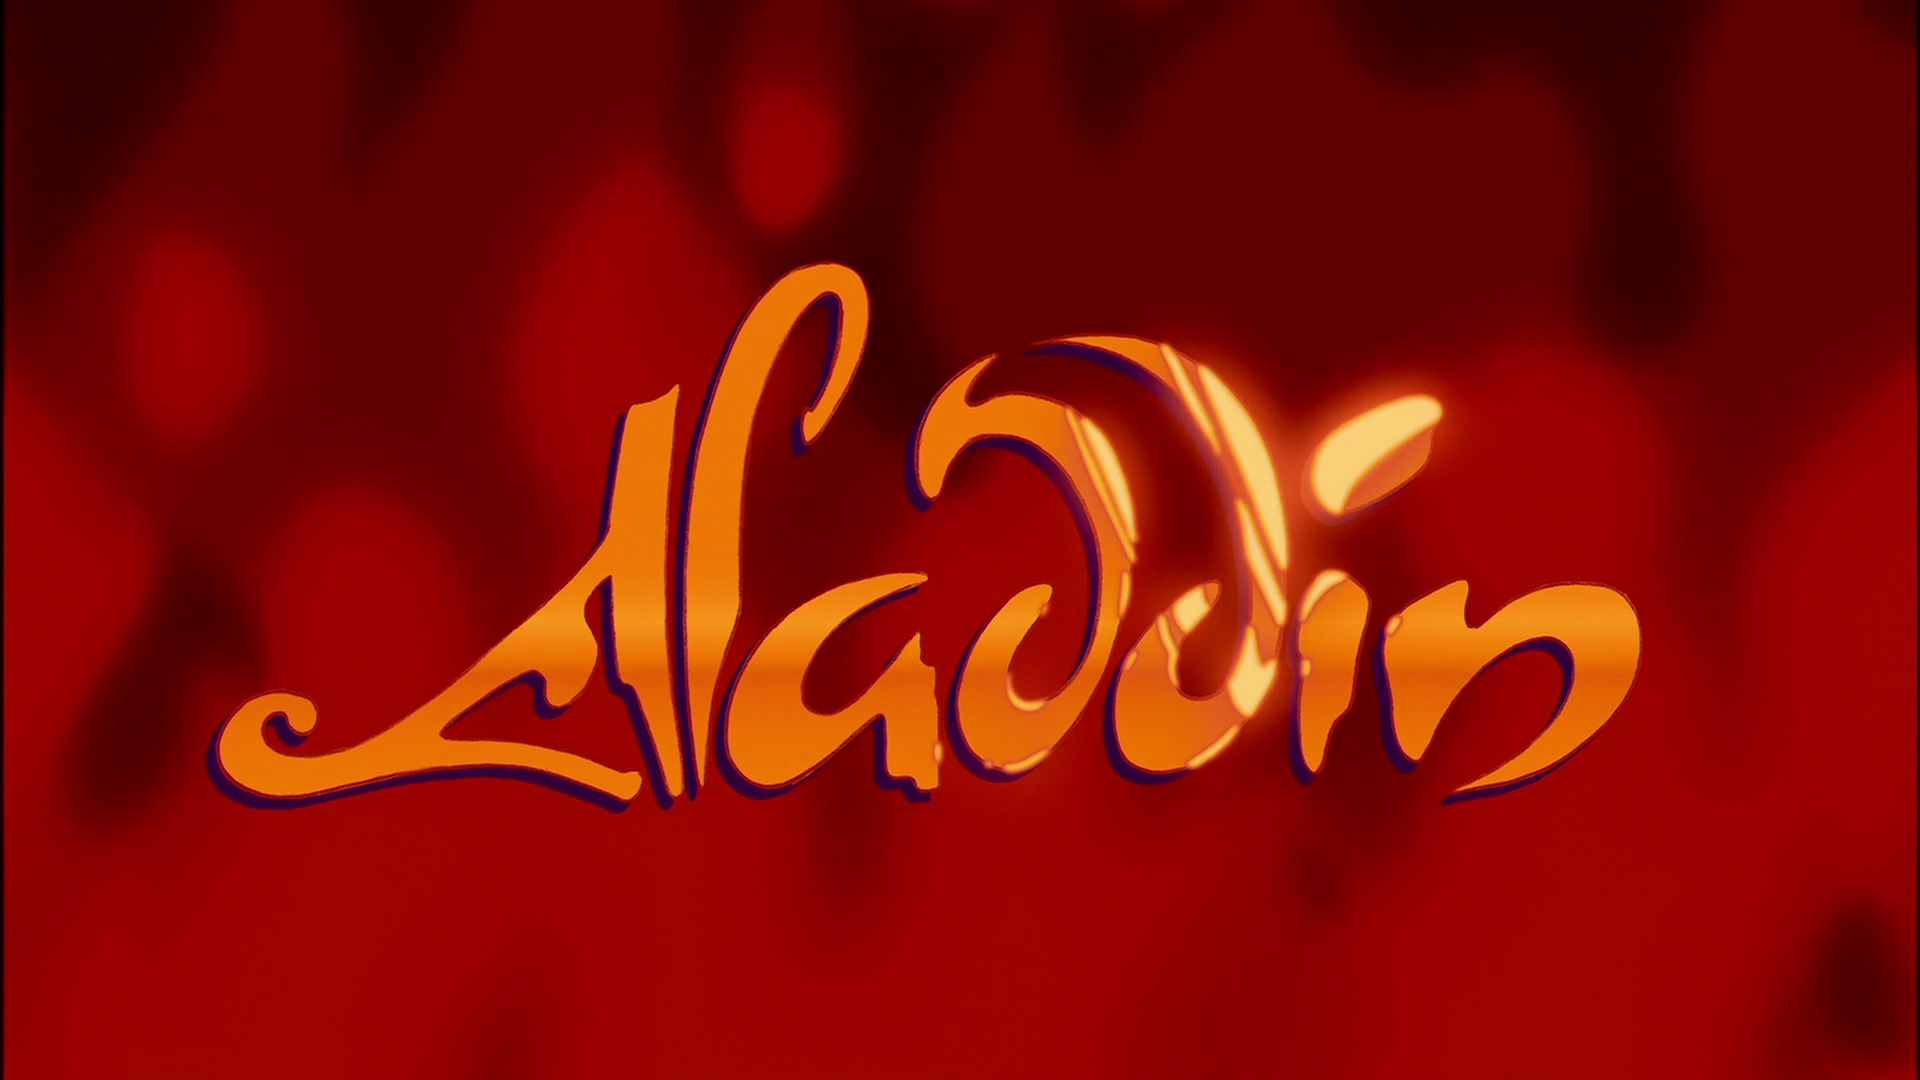 Aladdin (1992) Wallpapers